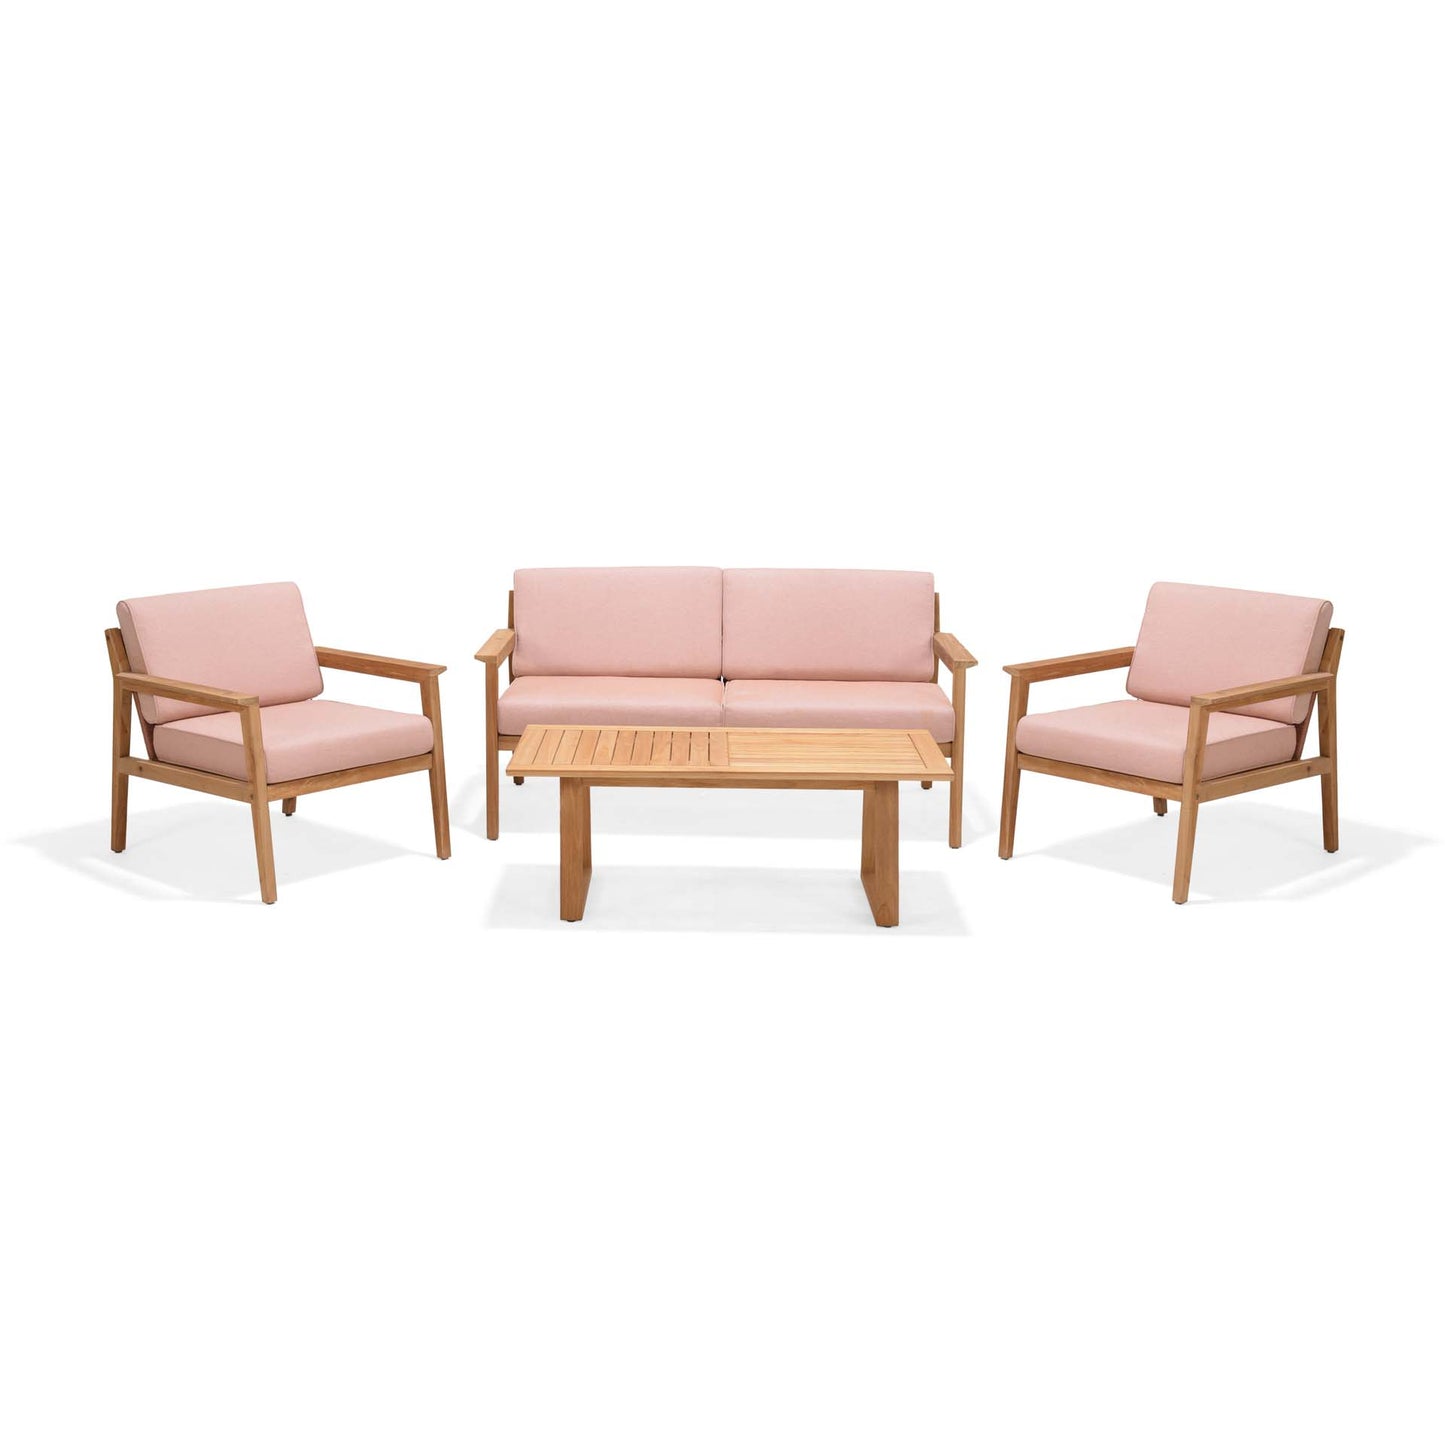 Agate Rope & Teak 100% FSC Certified Solid Wood Sofa-Chair